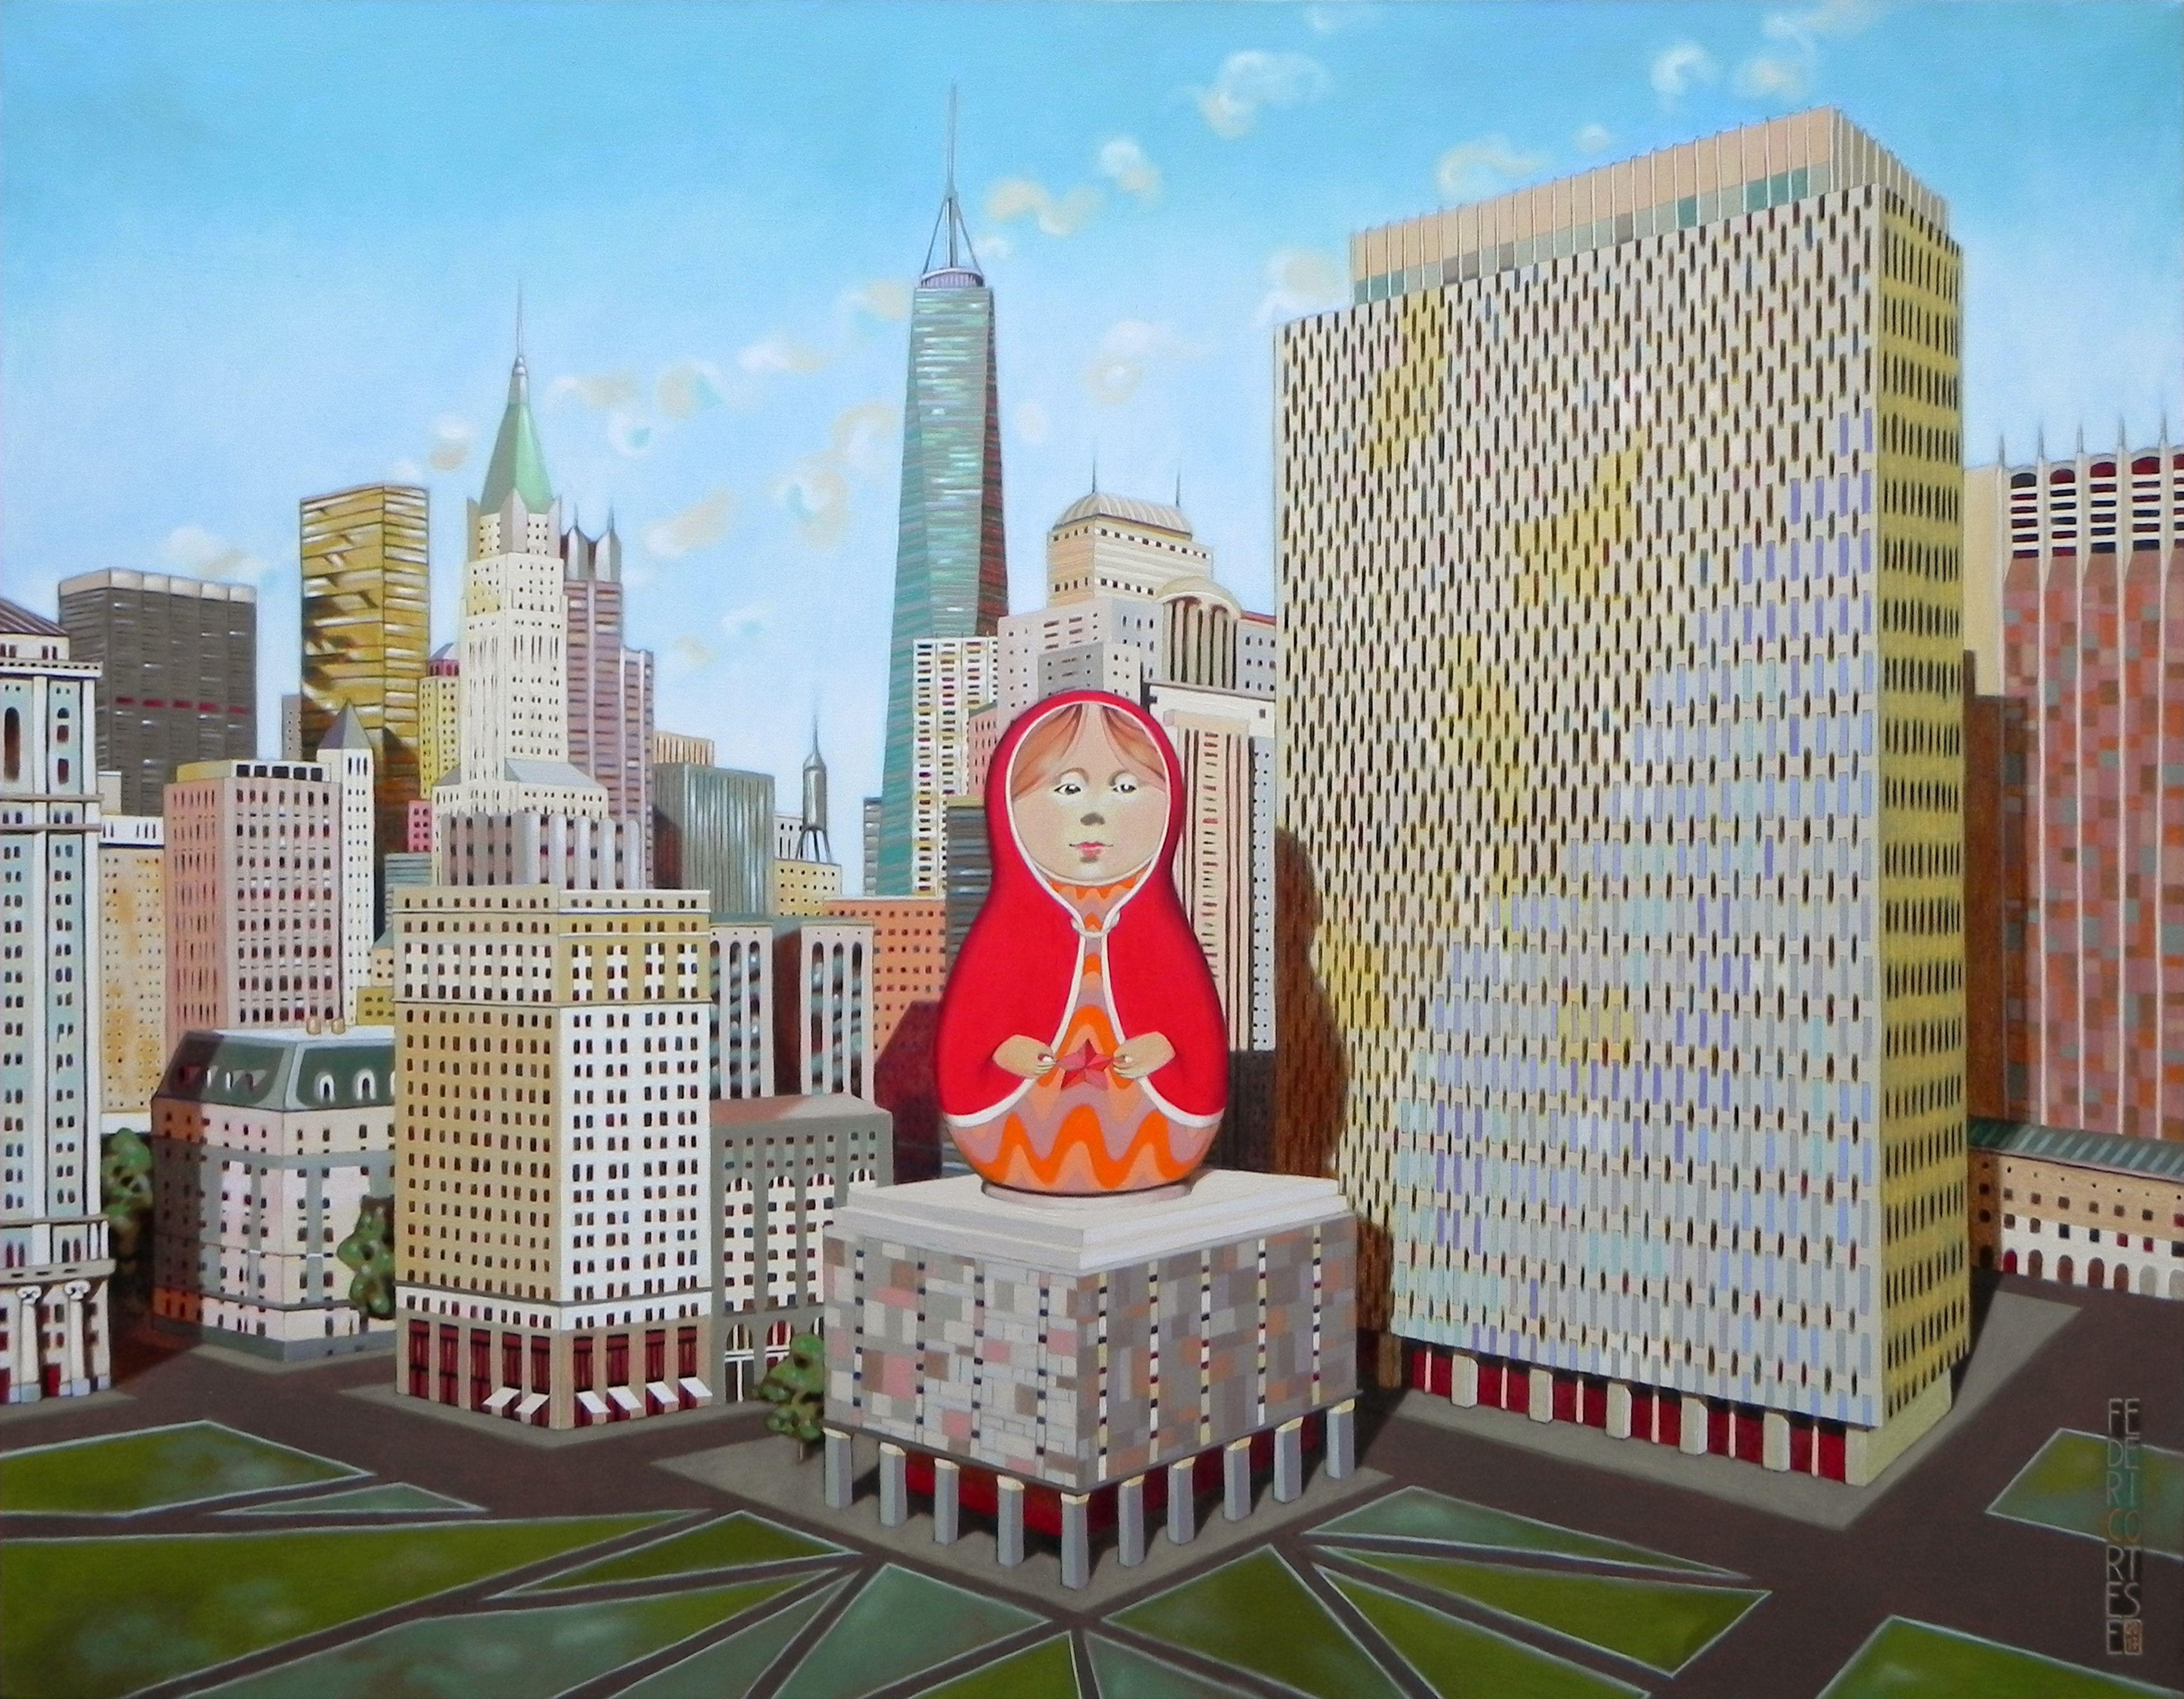 Civic Center with Matrioska, Gemälde, Öl auf Leinwand – Painting von Federico Cortese